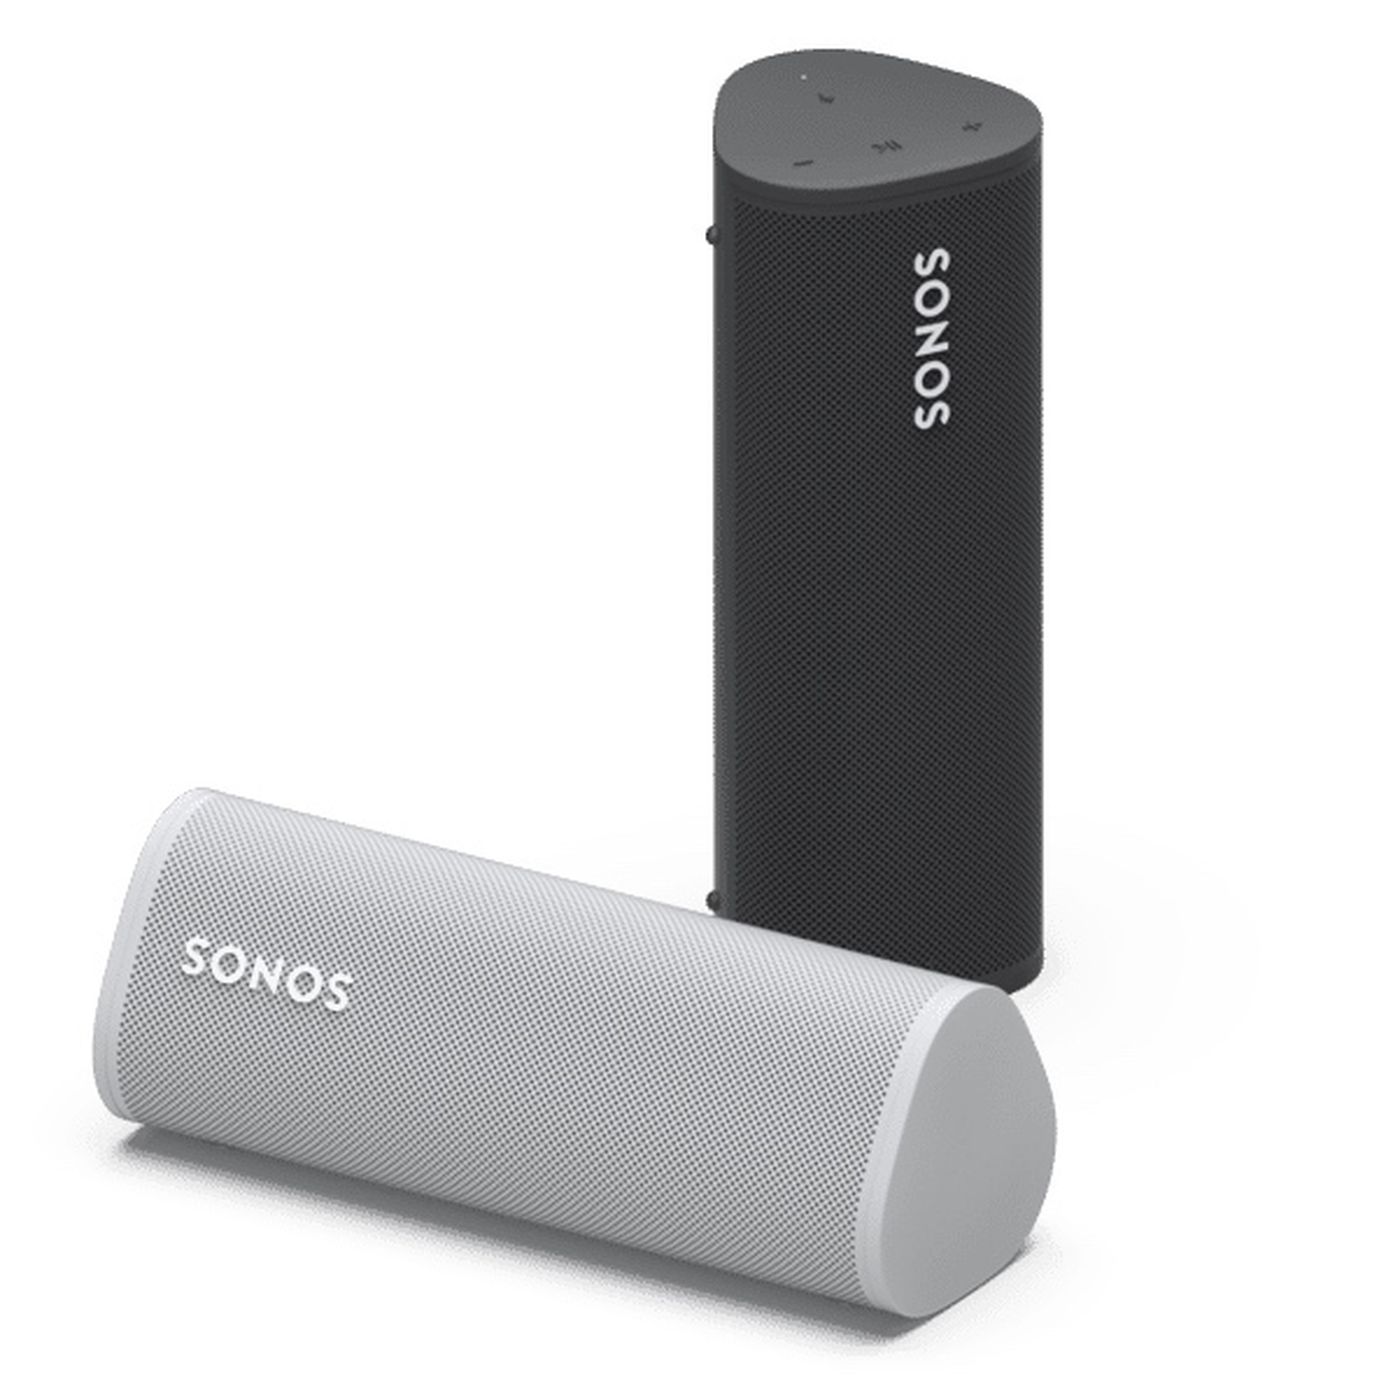 Sonos Roam - Best Sonos Speakers